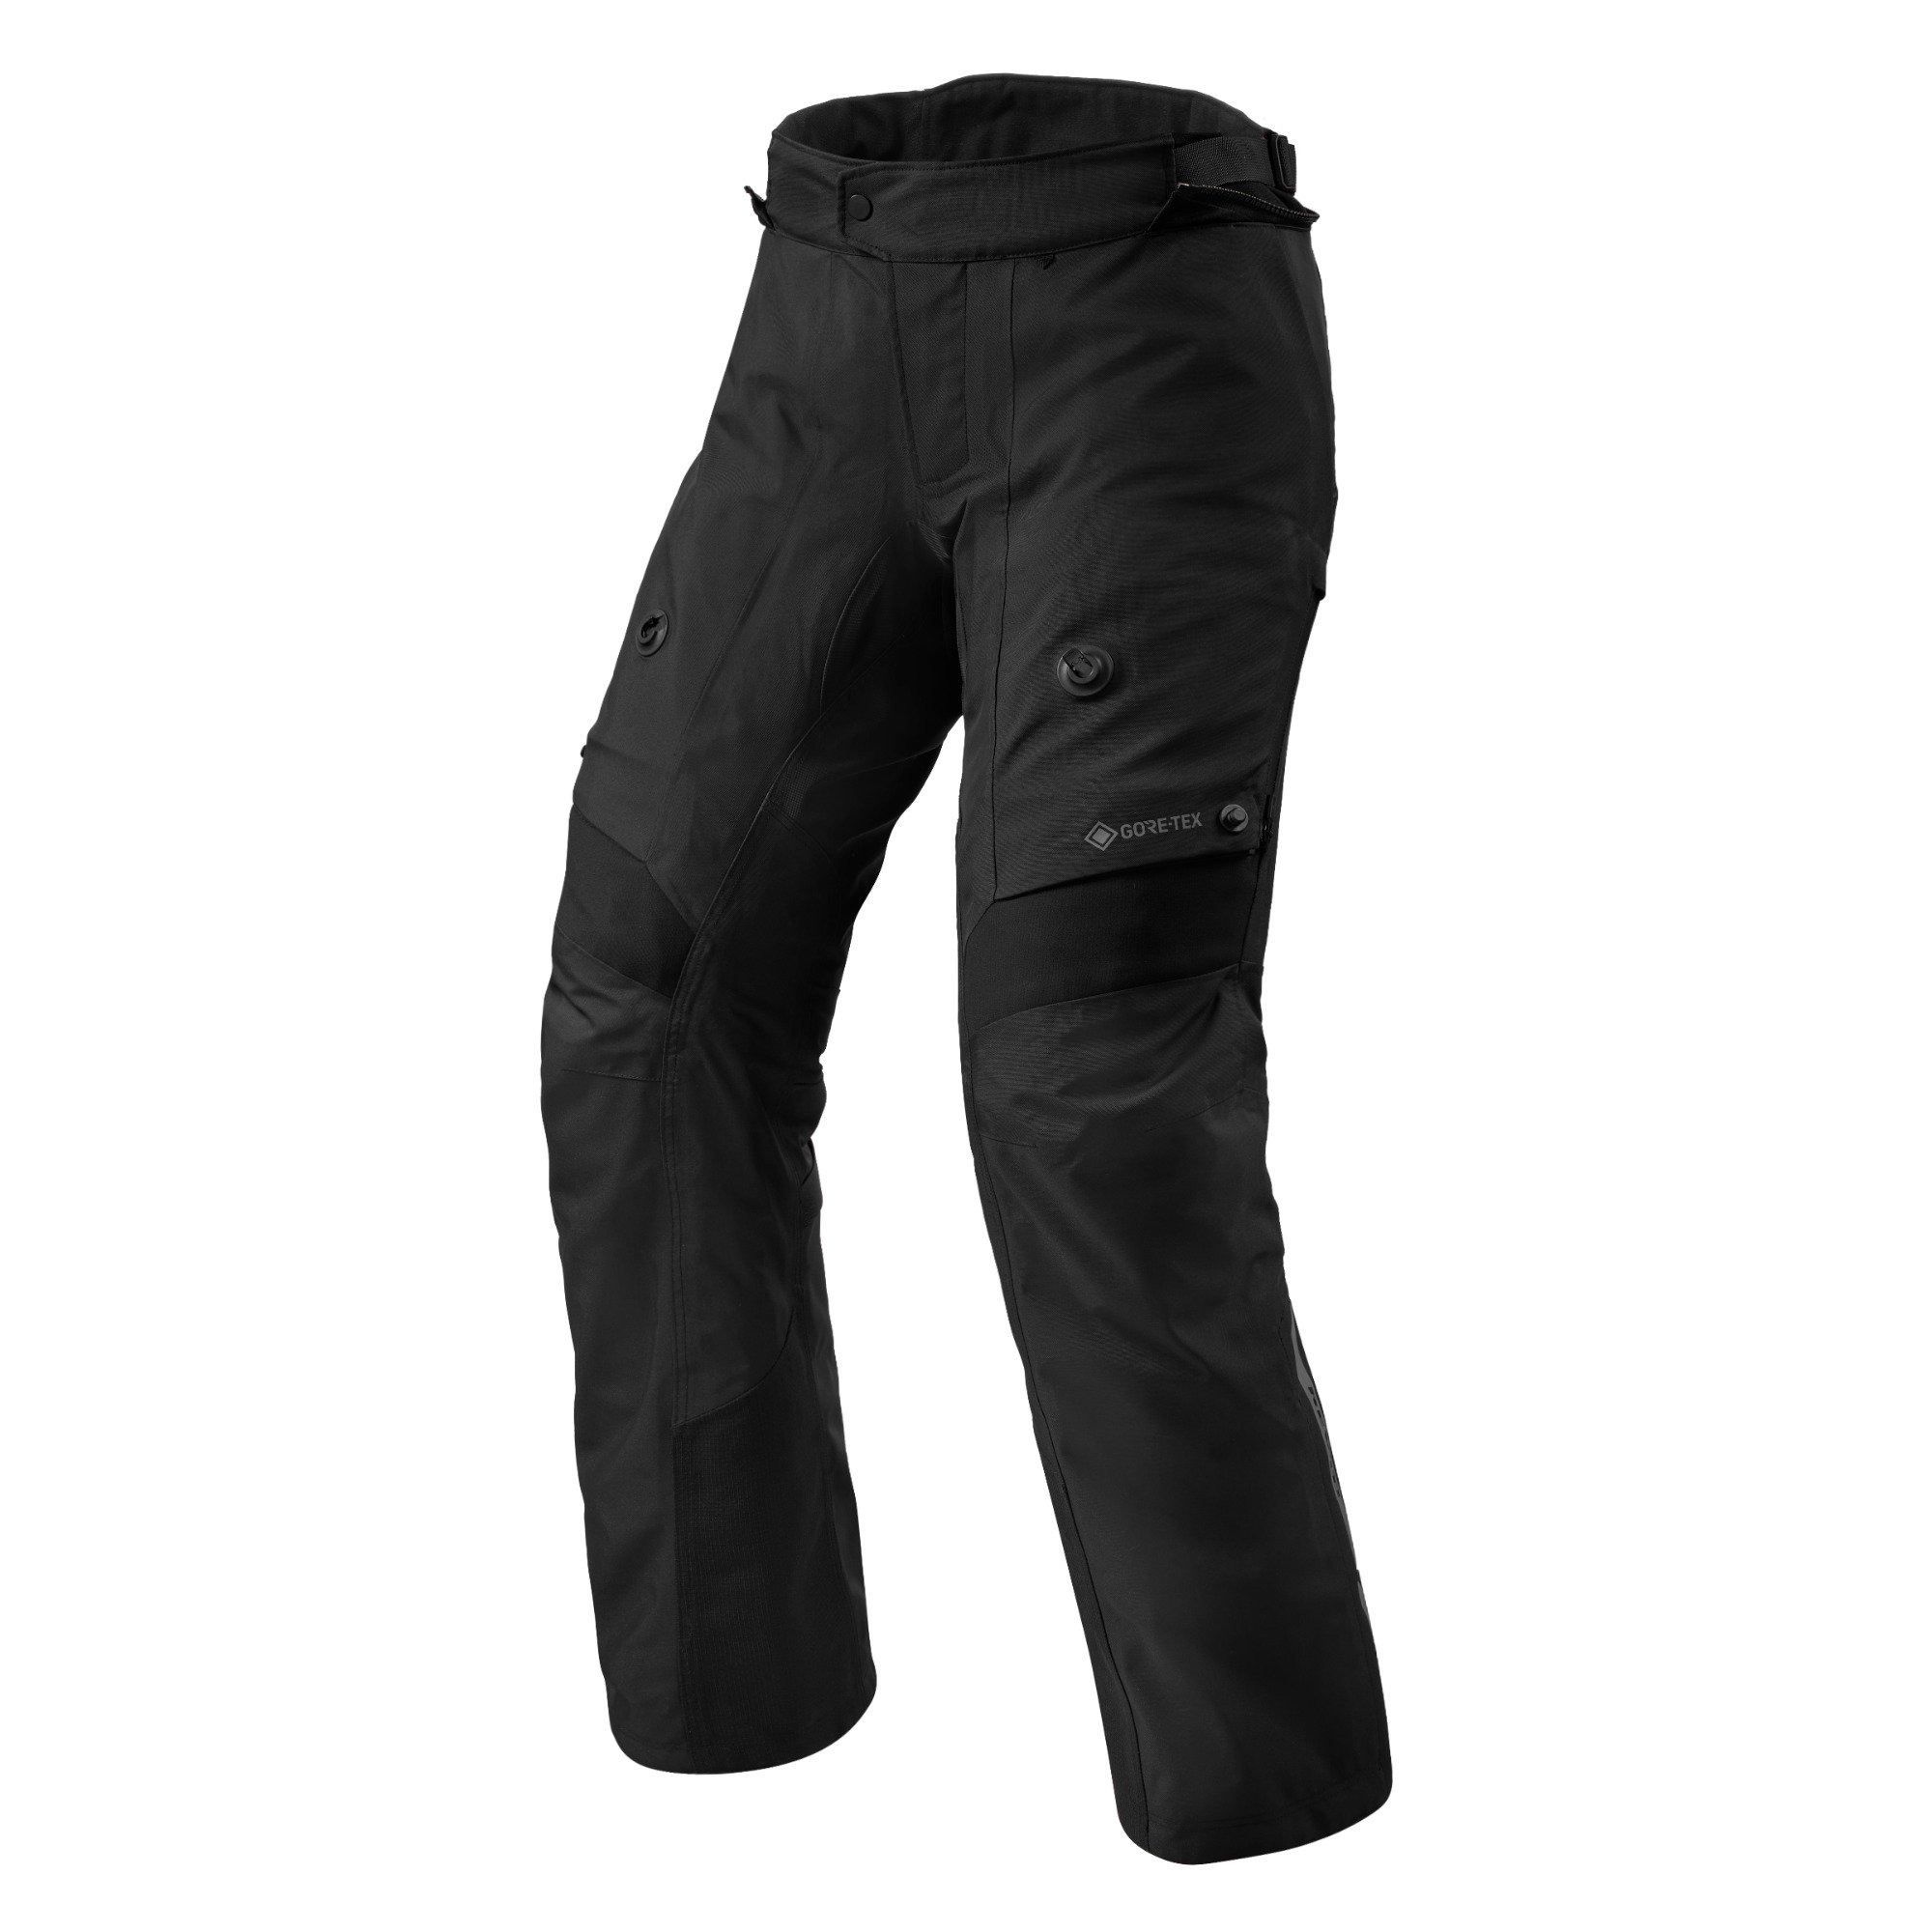 Image of REV'IT! Pants Poseidon 3 GTX Black Standard Motorcycle Pants Talla S